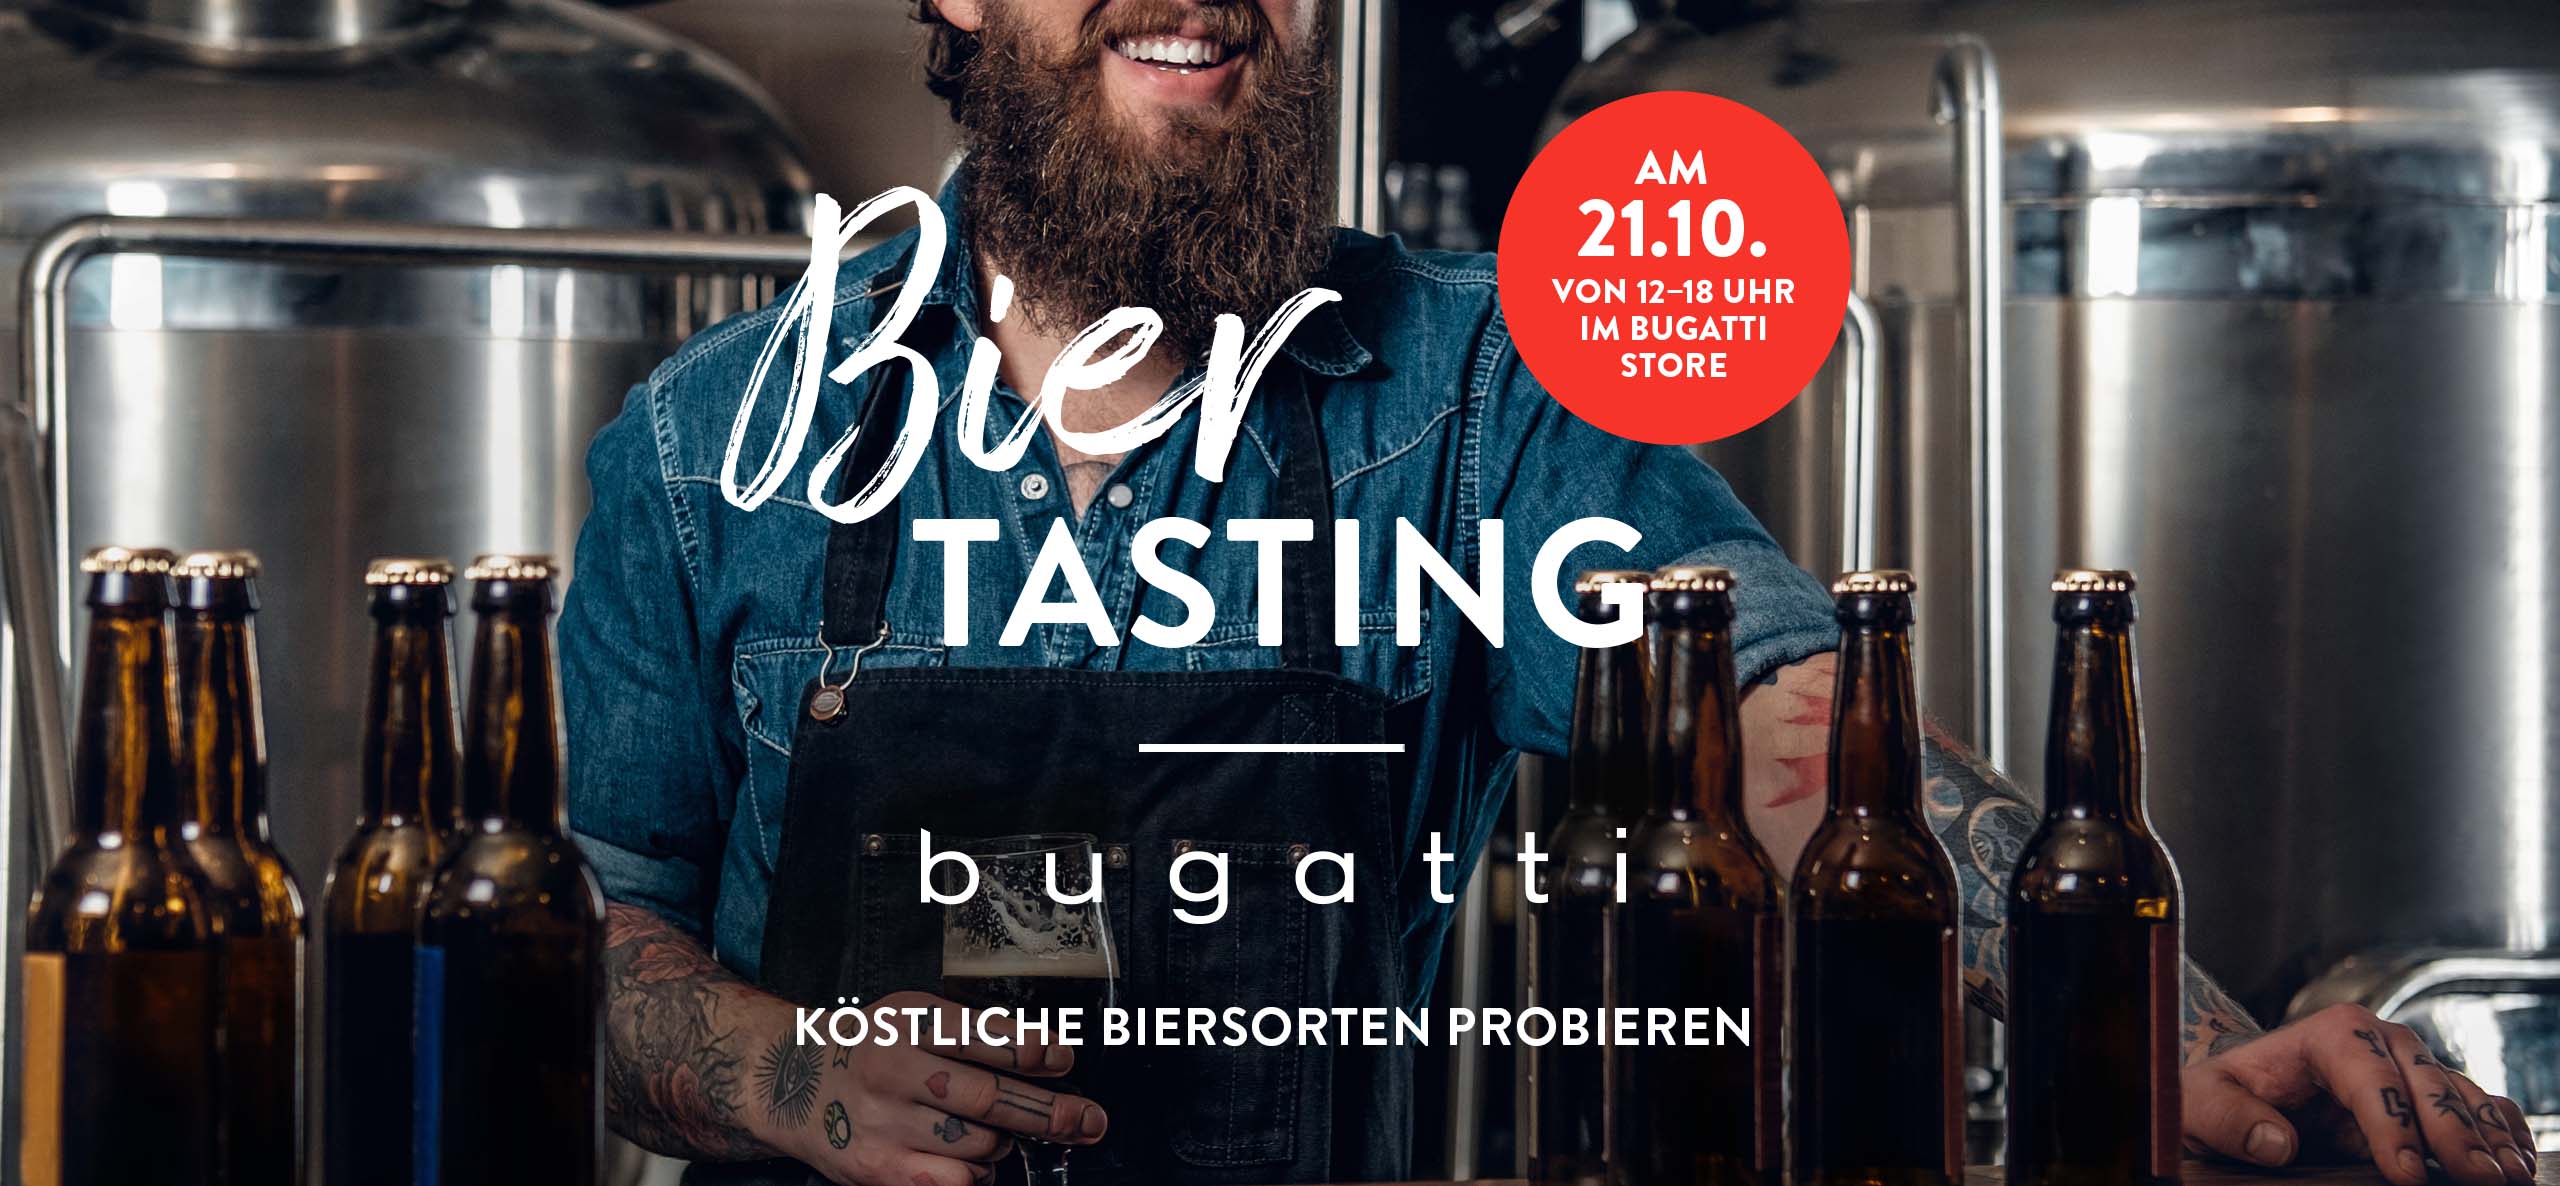 Bier Tasting bugatti - City Outlet Bad Münstereifel